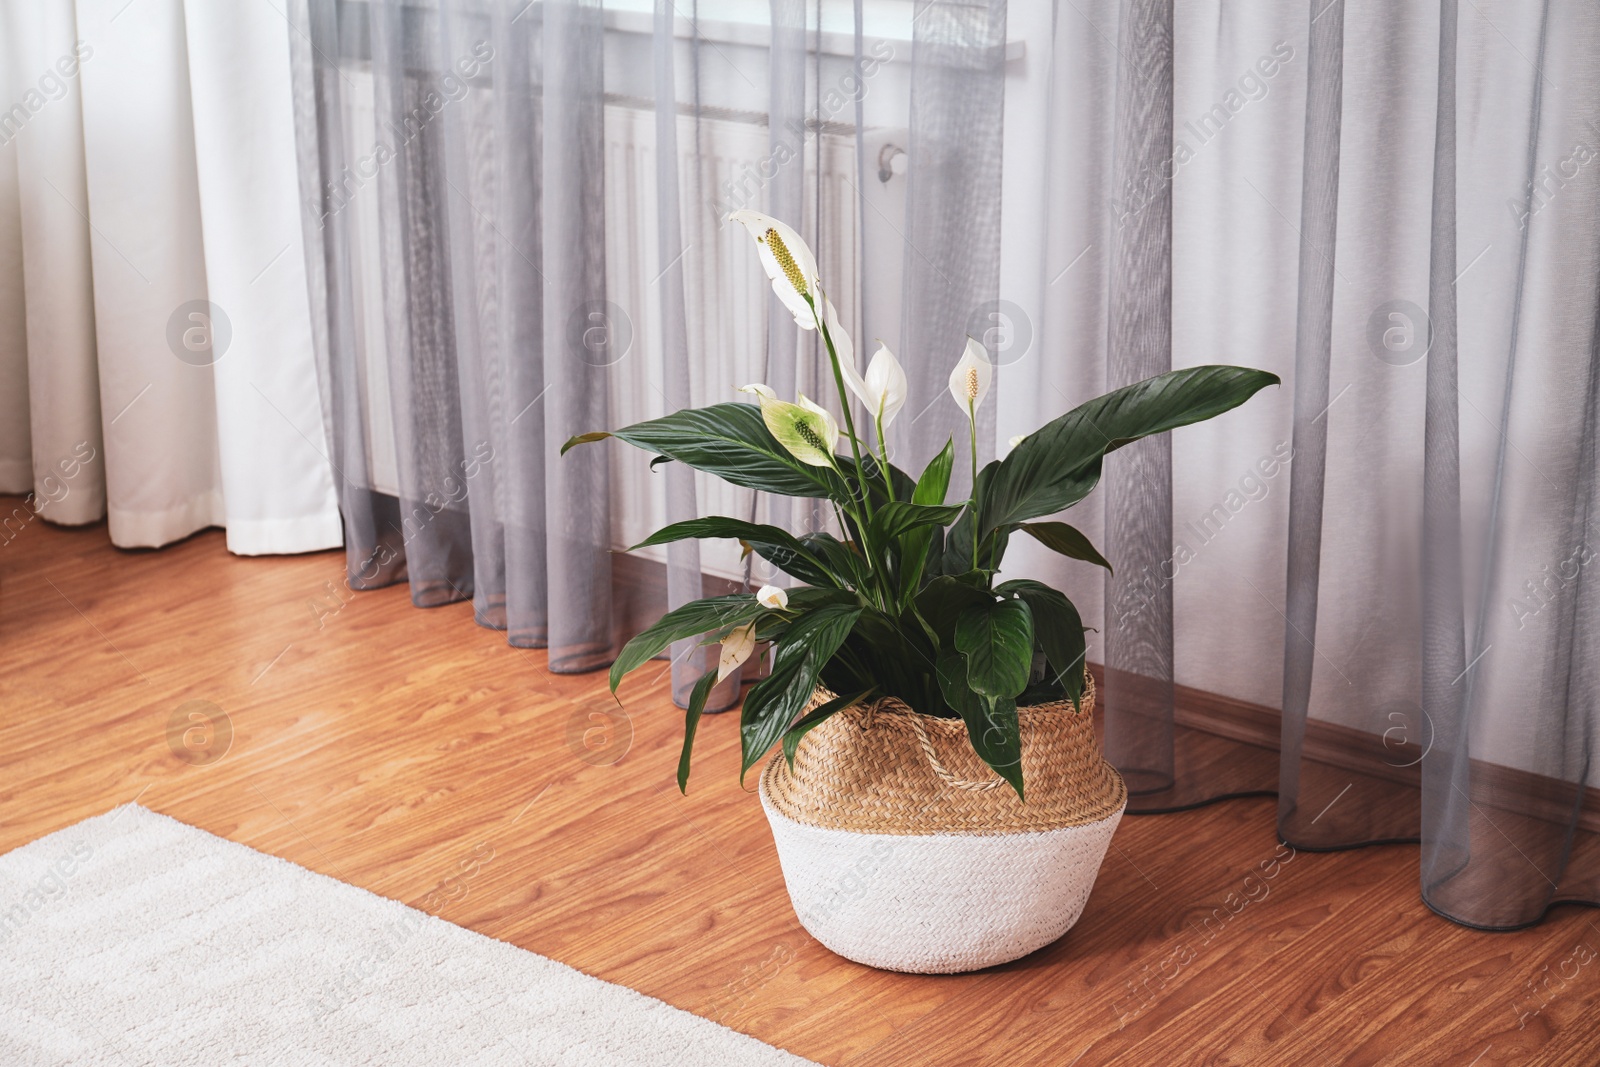 Photo of Beautiful peace lily in wicker pot near window indoors. Interior design idea